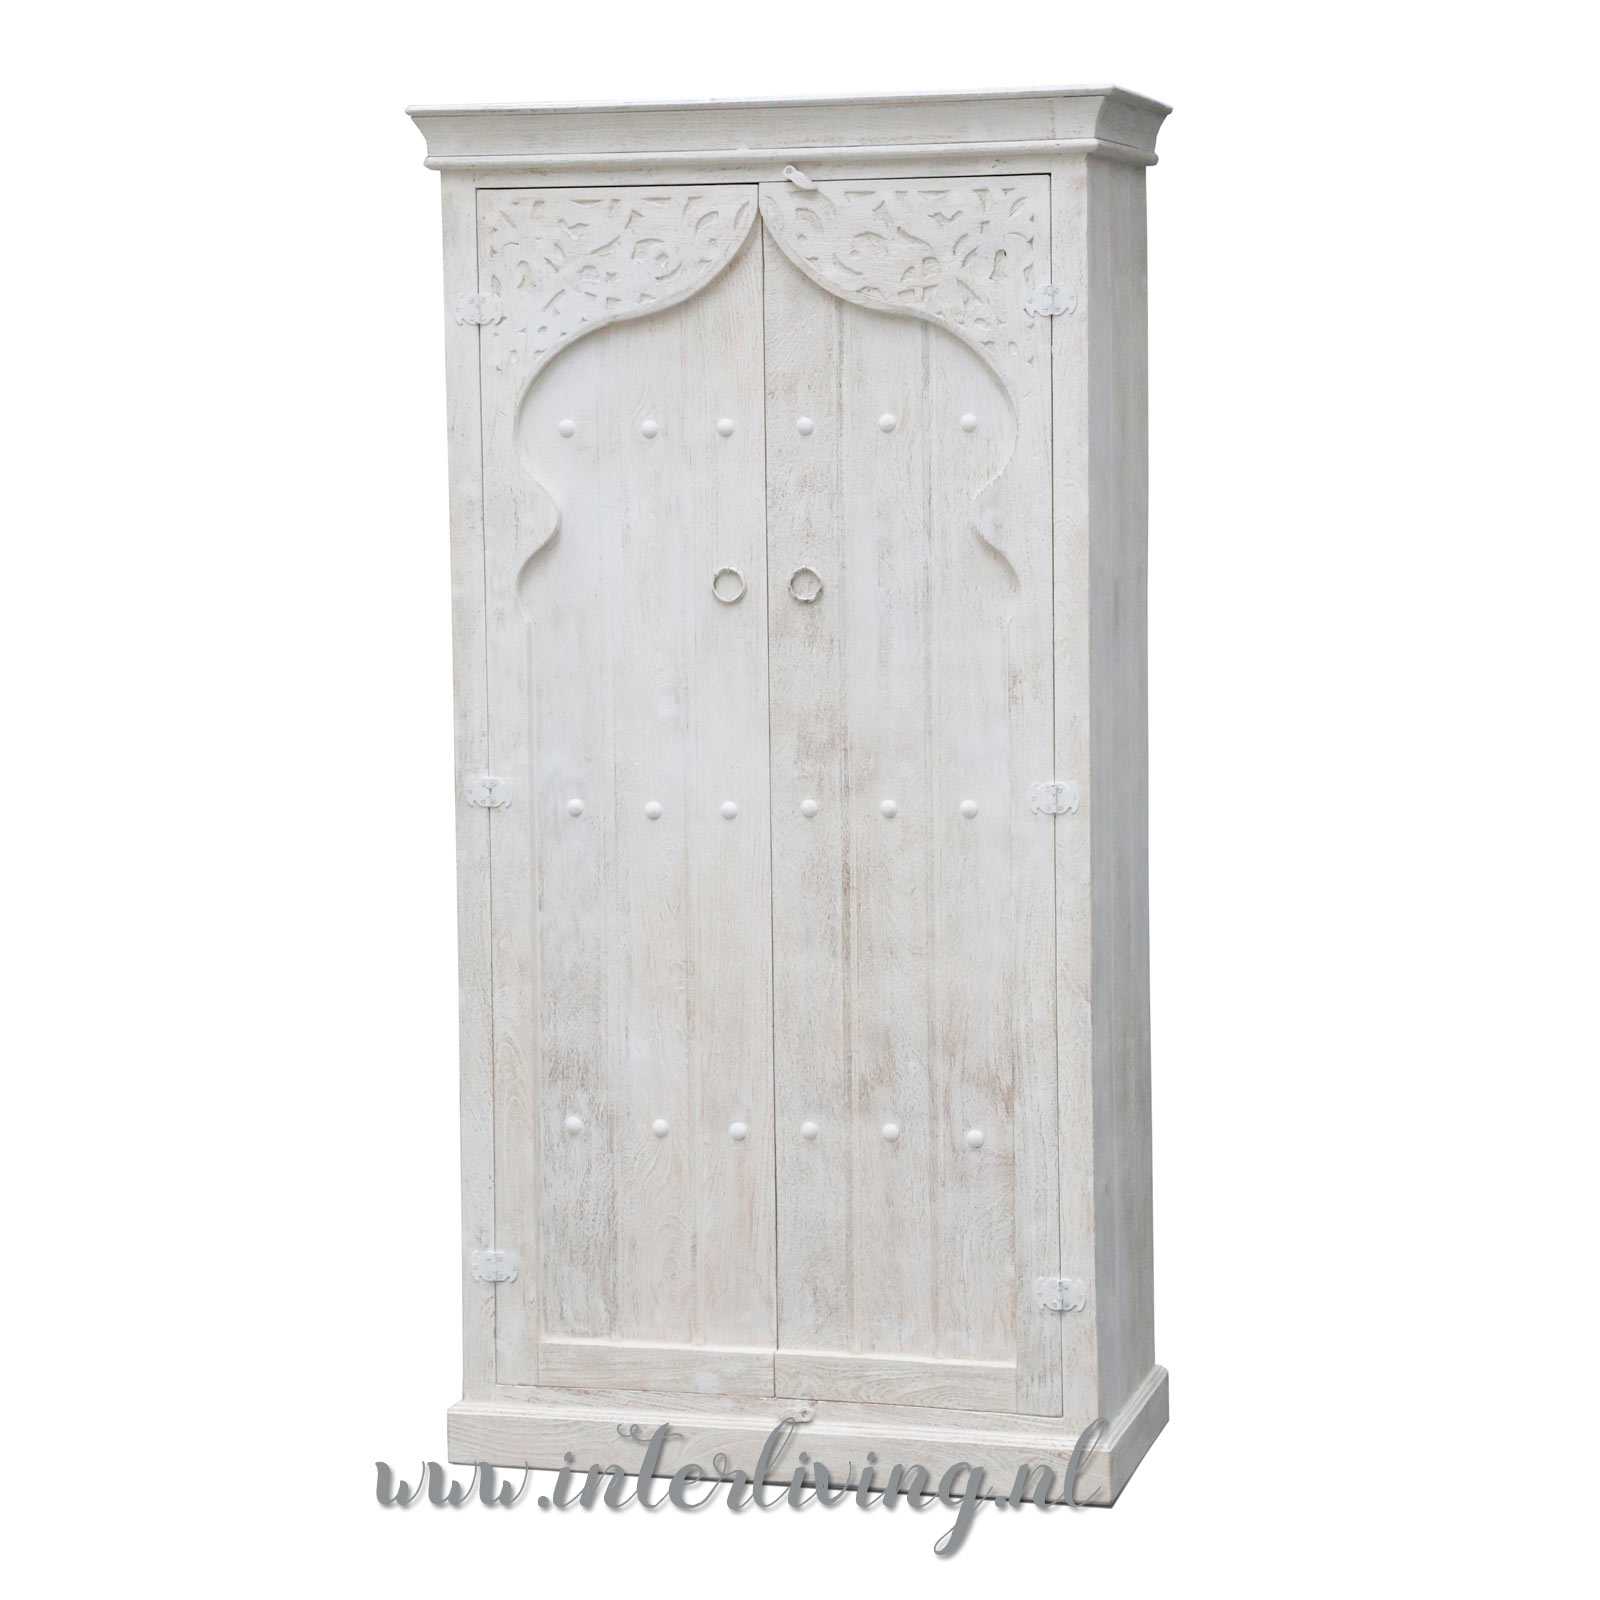 Begrafenis Klein agenda Marokkaanse stijl kast wit van hout met bogen oude deur uit Marrakesh